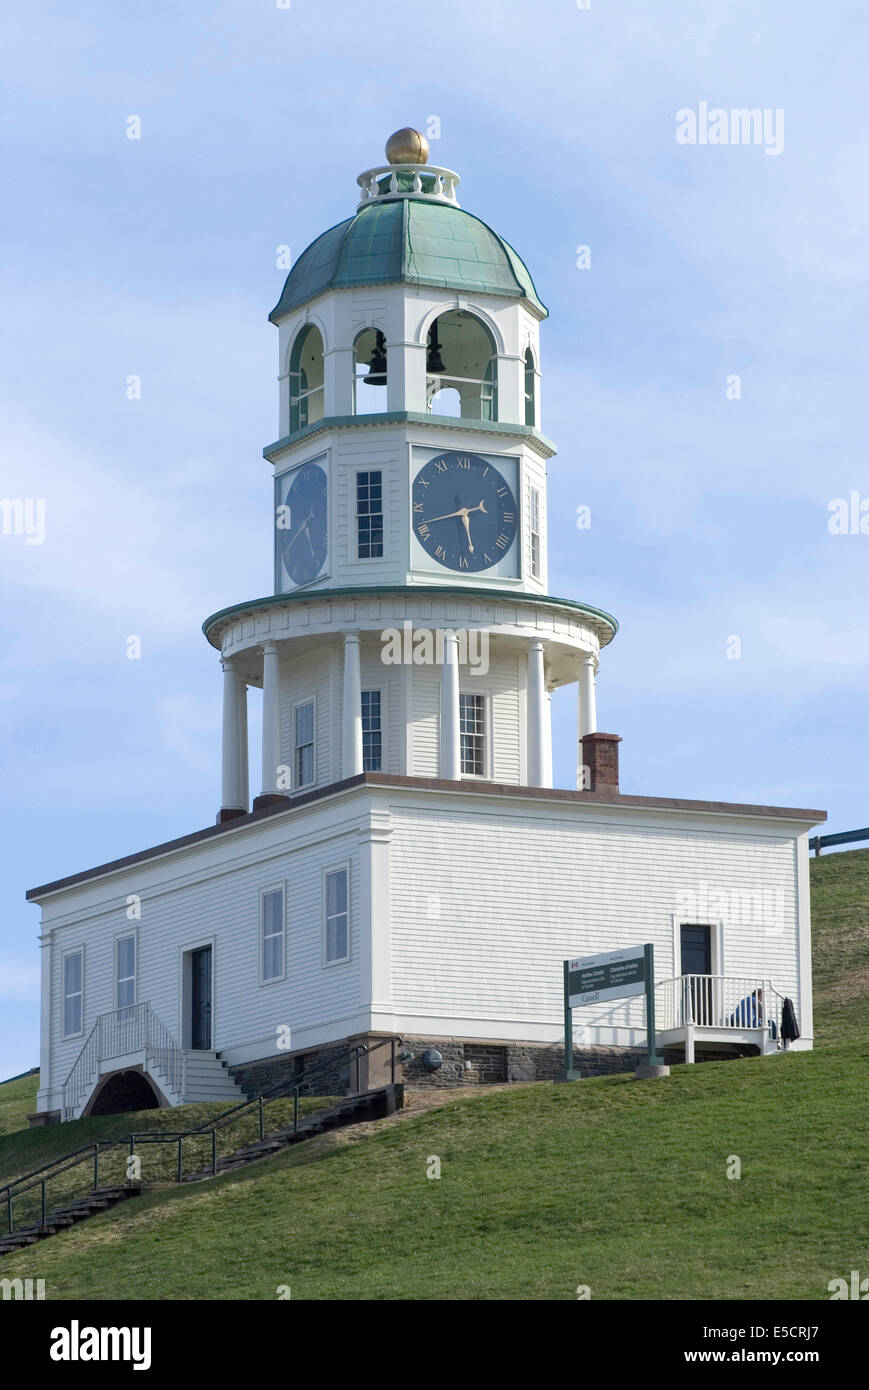 The Historic Clock Tower, Halifax, Nova Scotia, Canada Stock Photo